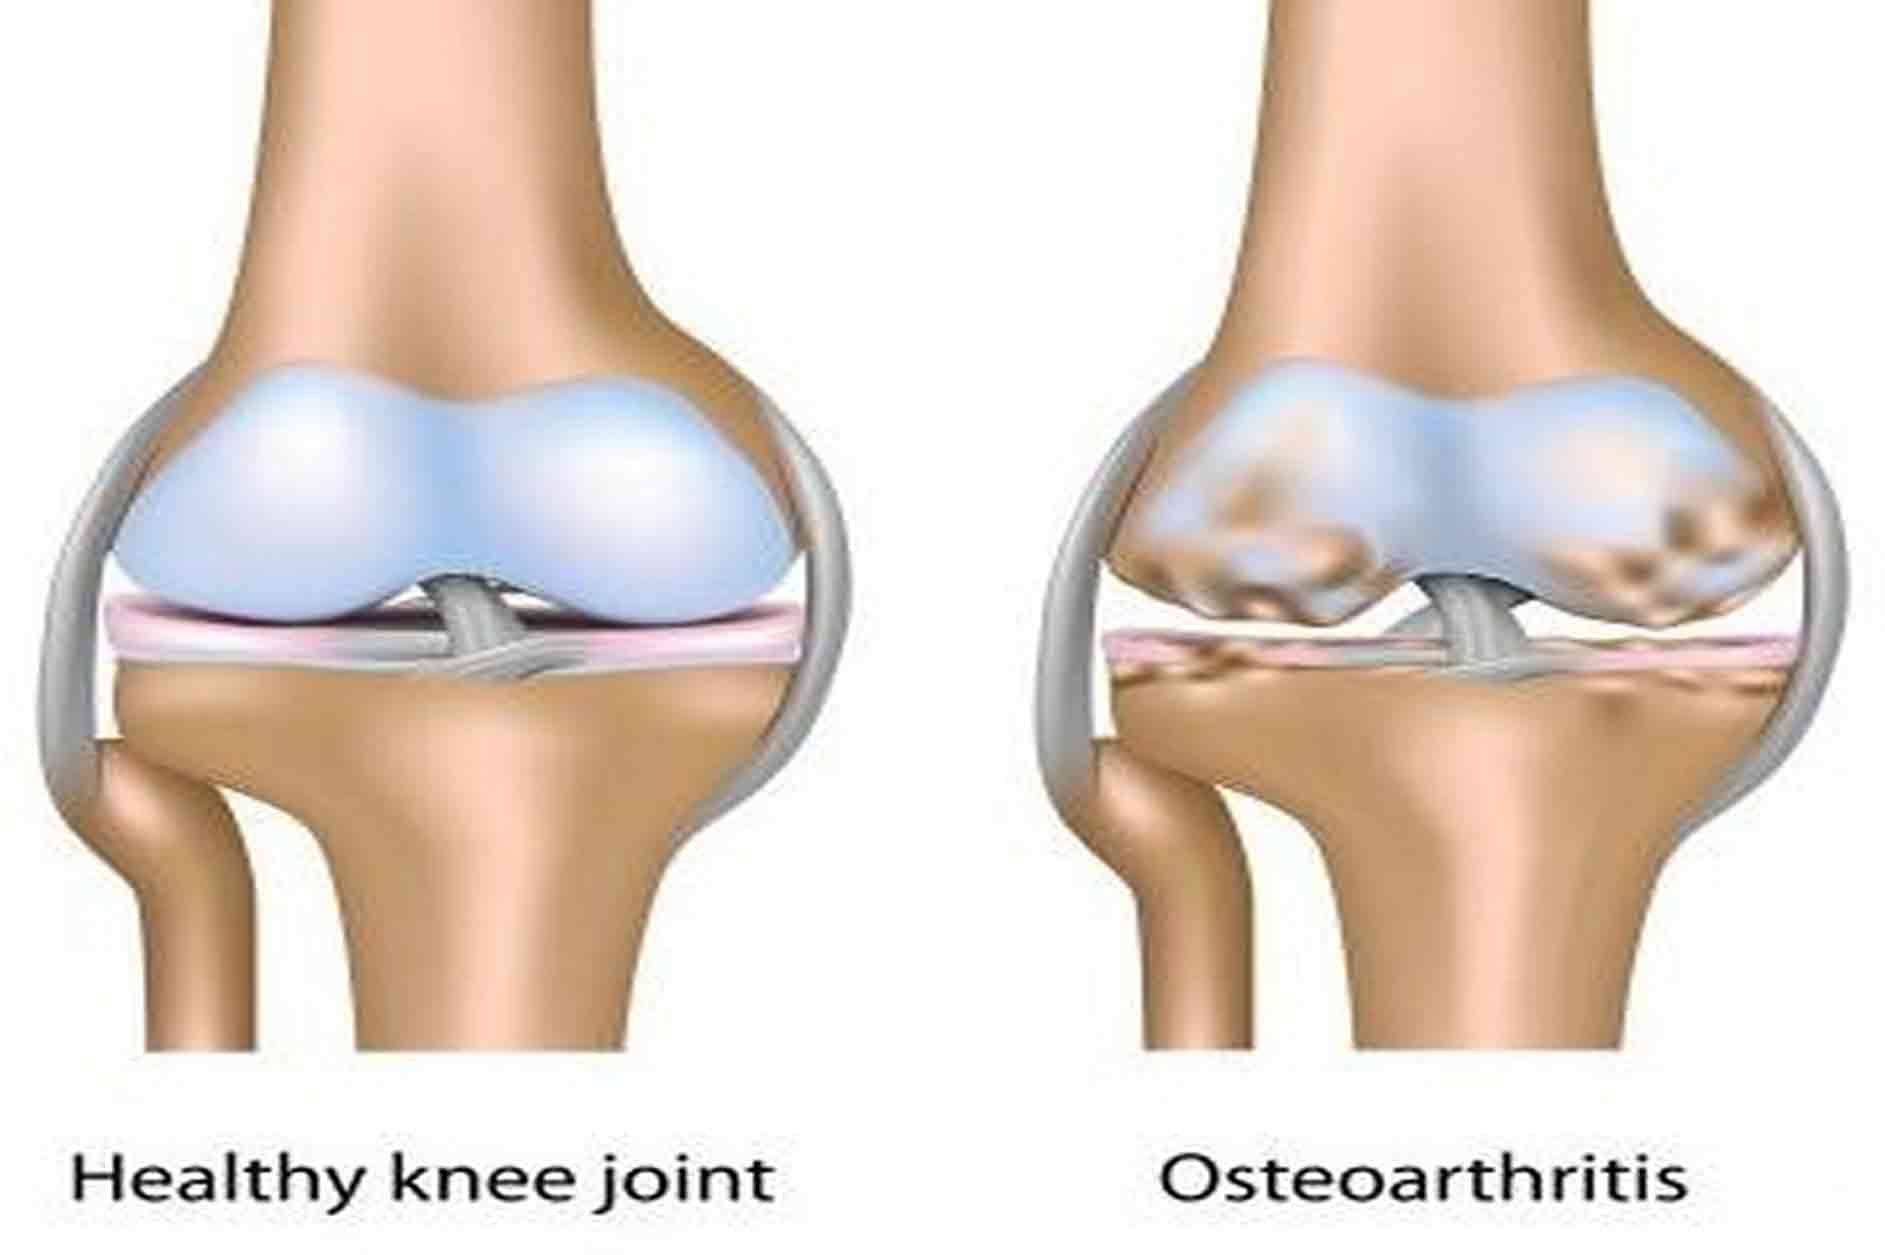 доа, остеоартроз, лечение остеоартрита суставов, сустав воспаление, остеоартрит, остеоартрит суставов, остеоартрит лечение, коленный остеоартрит